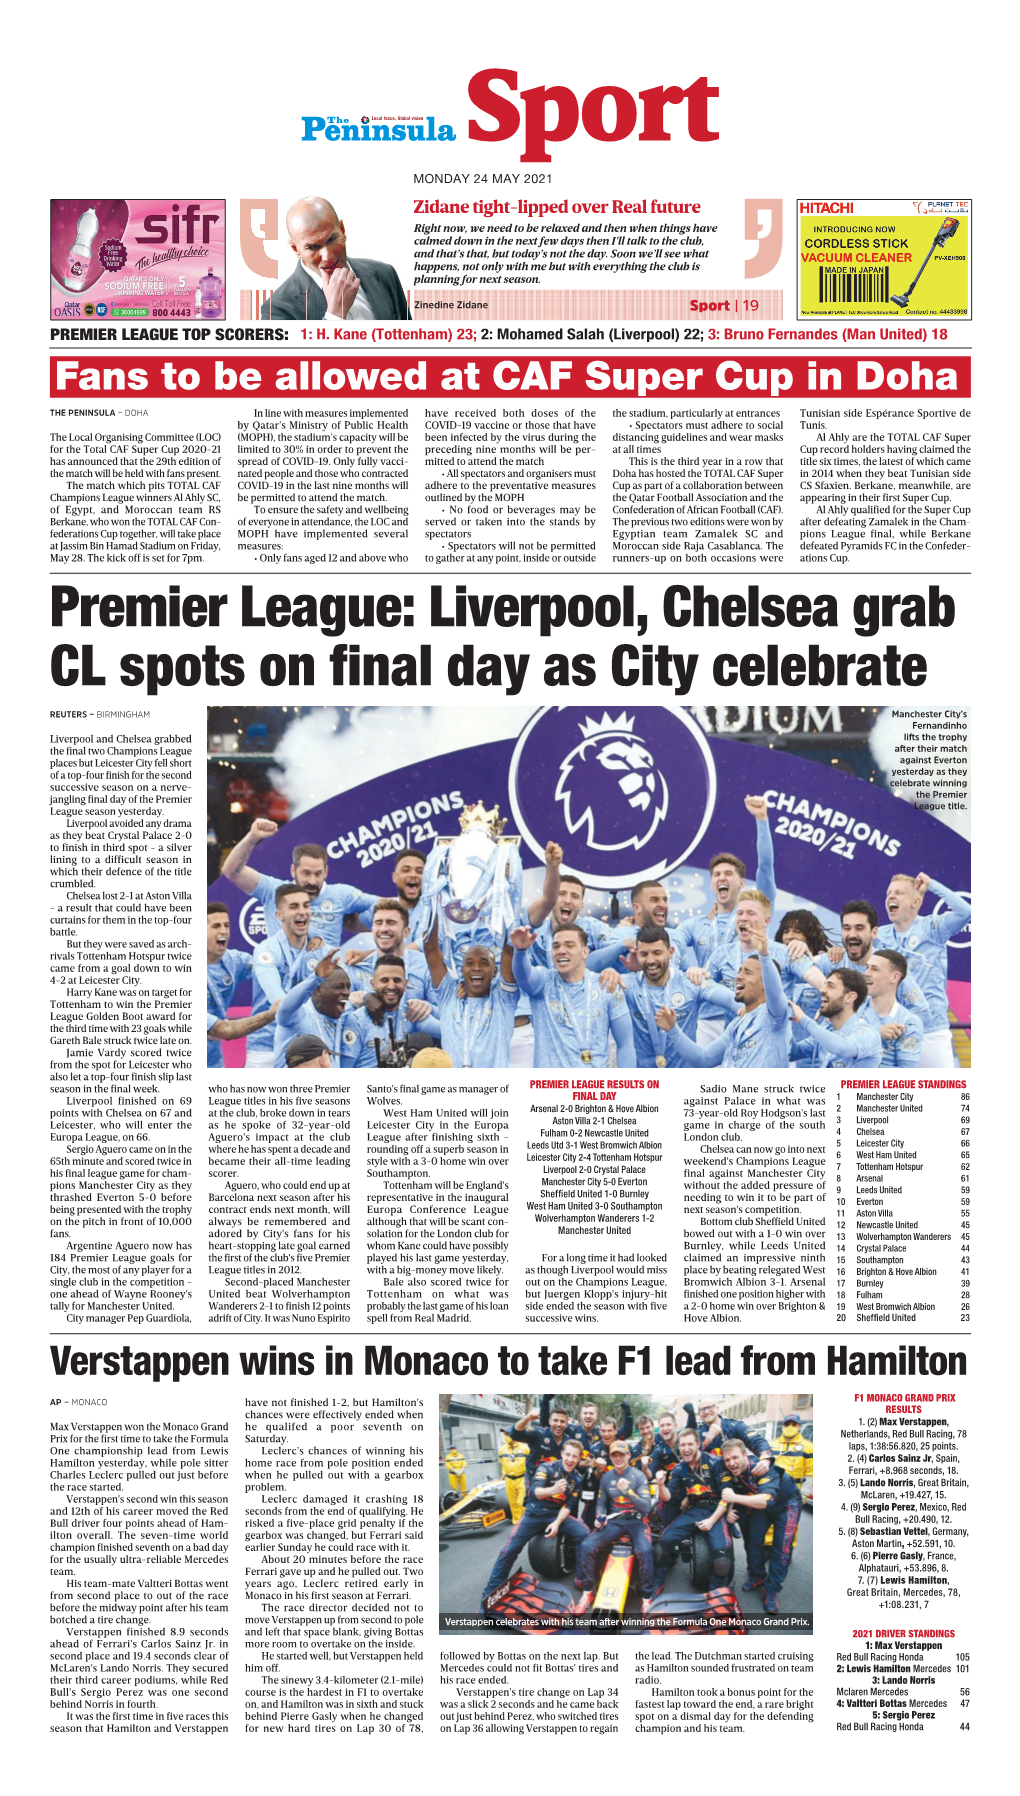 Premier League: Liverpool, Chelsea Grab CL Spots on Final Day As City Celebrate